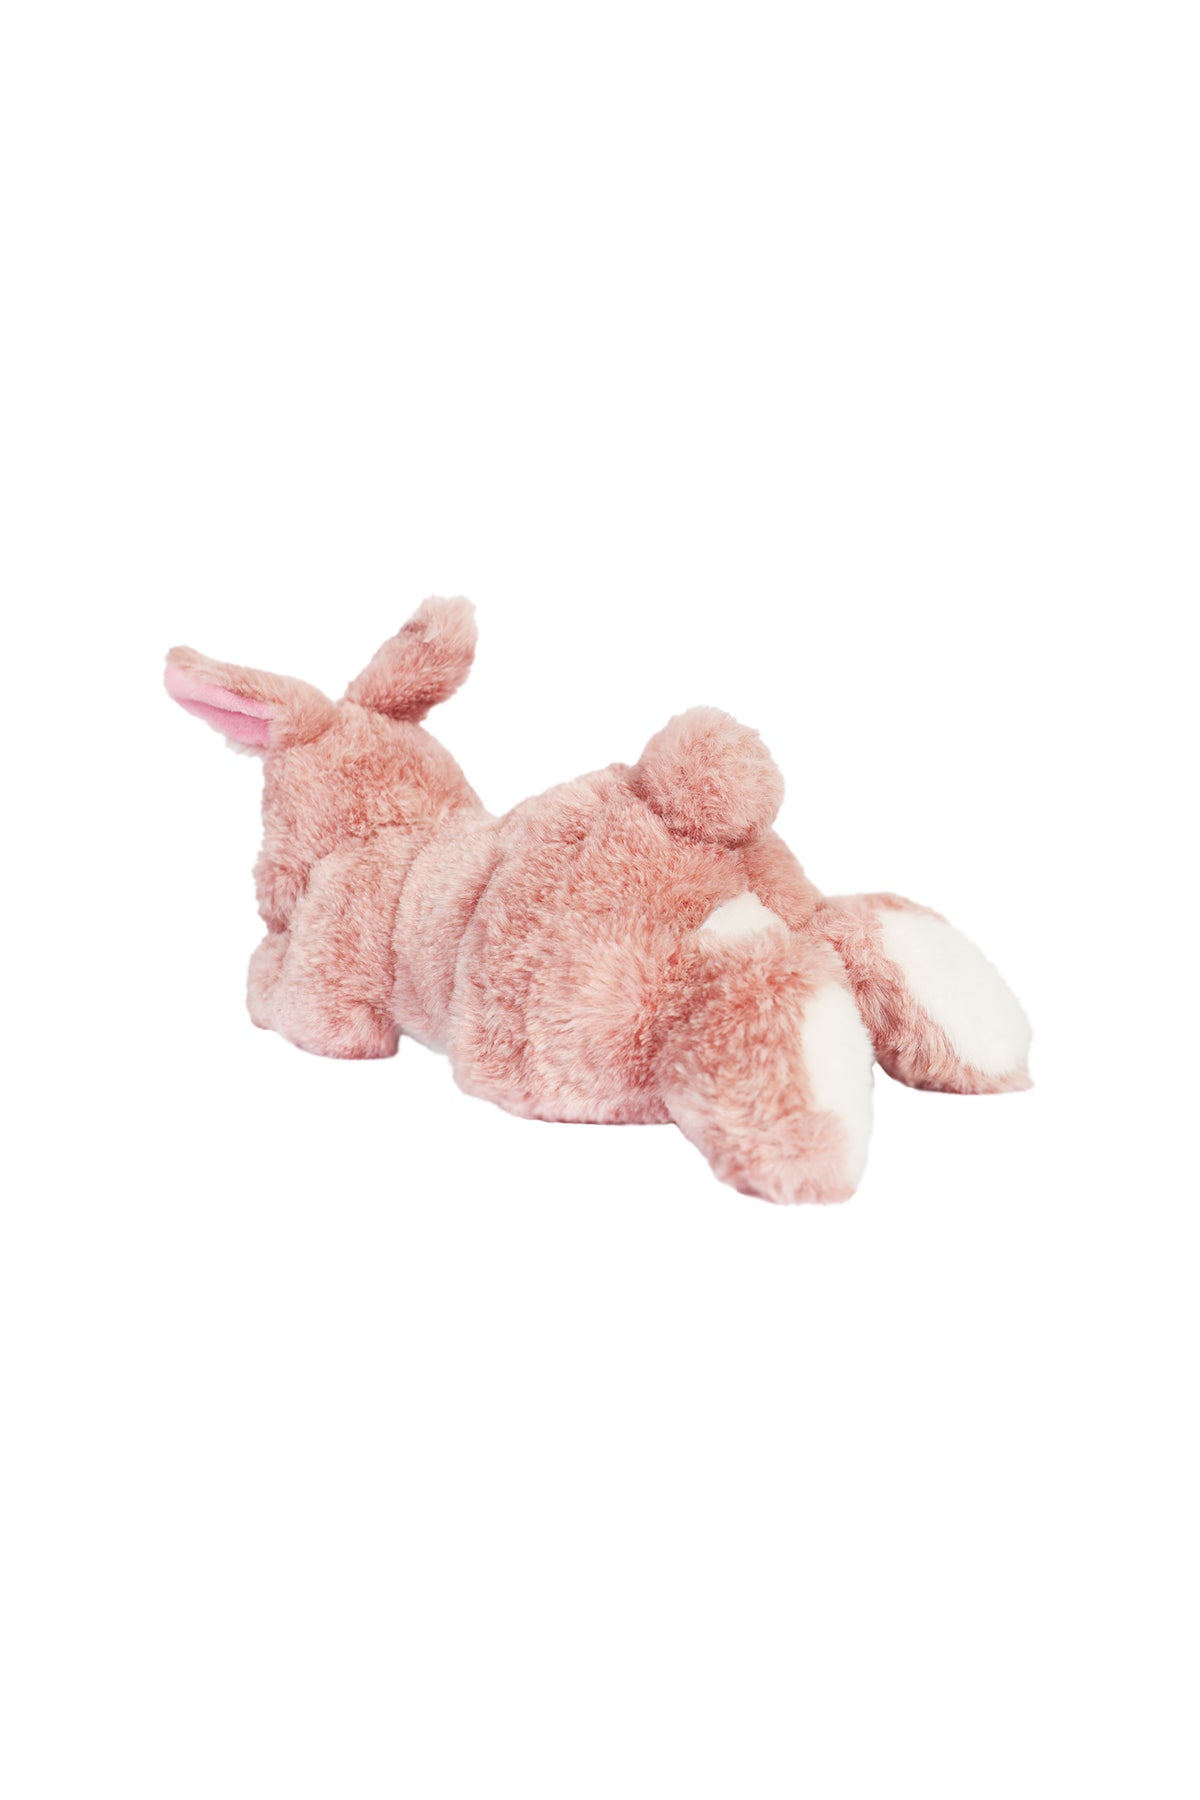 Stuffed Soft Bunny Rabbit Toy